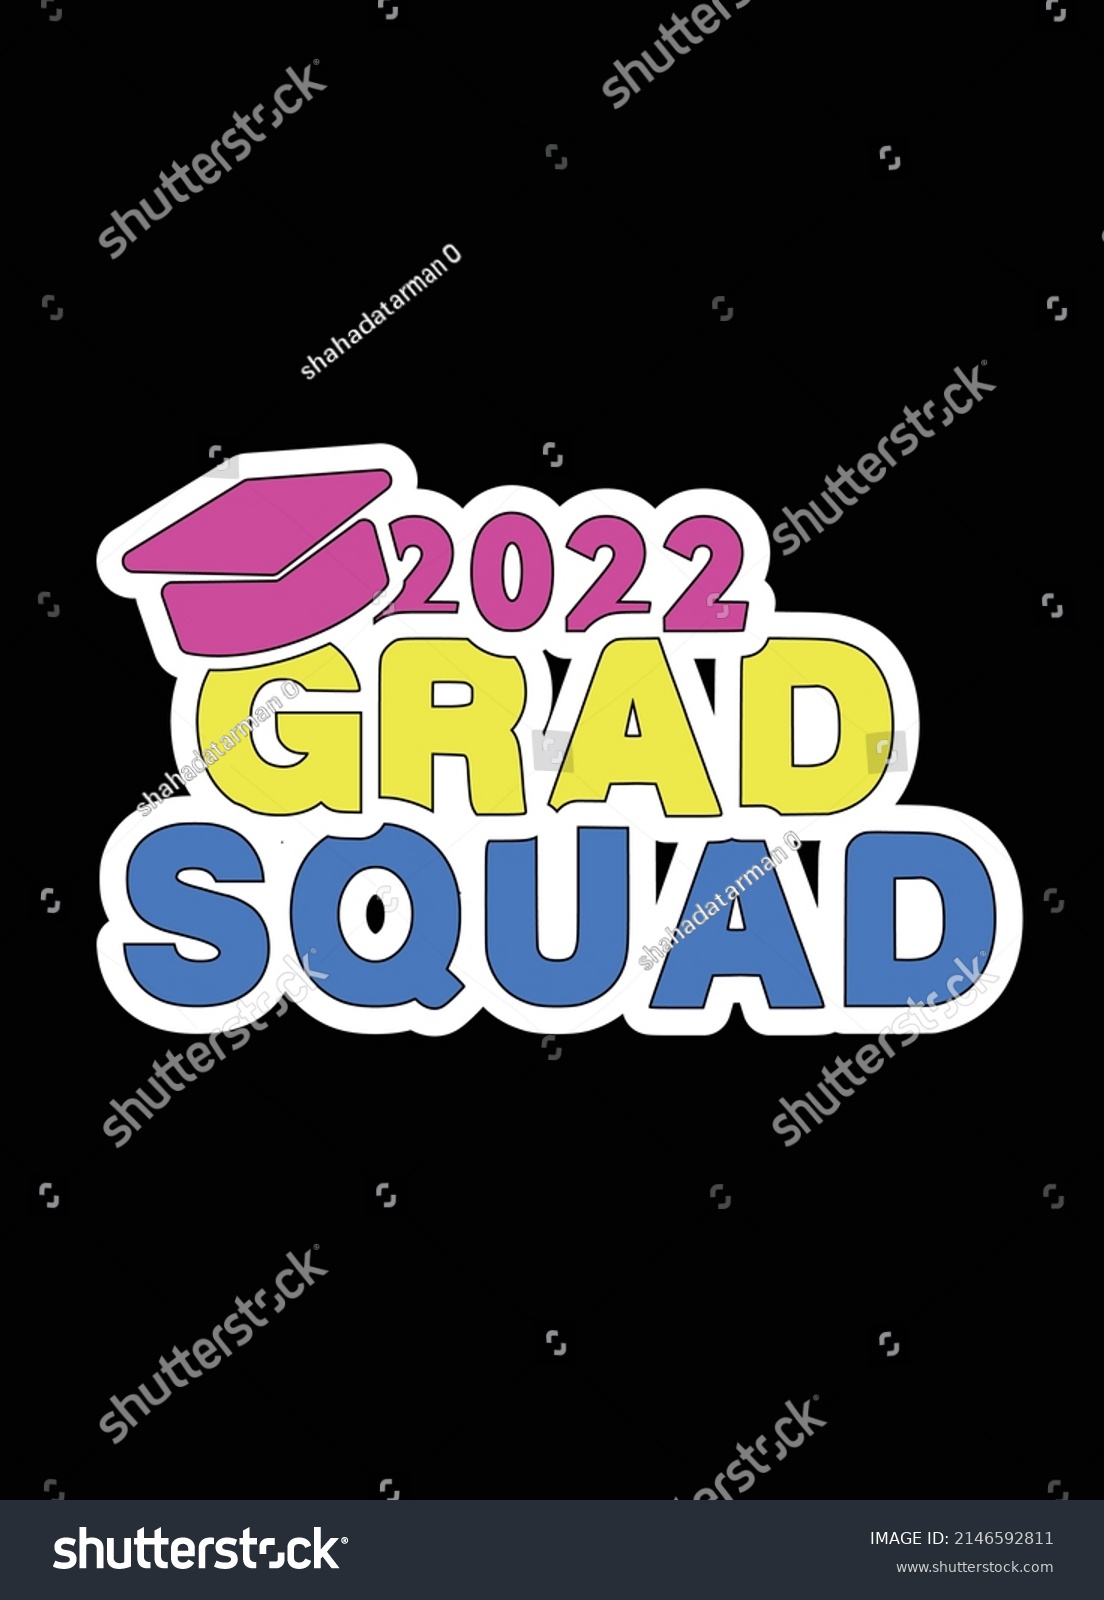 SVG of 2022 grad squad ,Graduation t-shirt design. svg